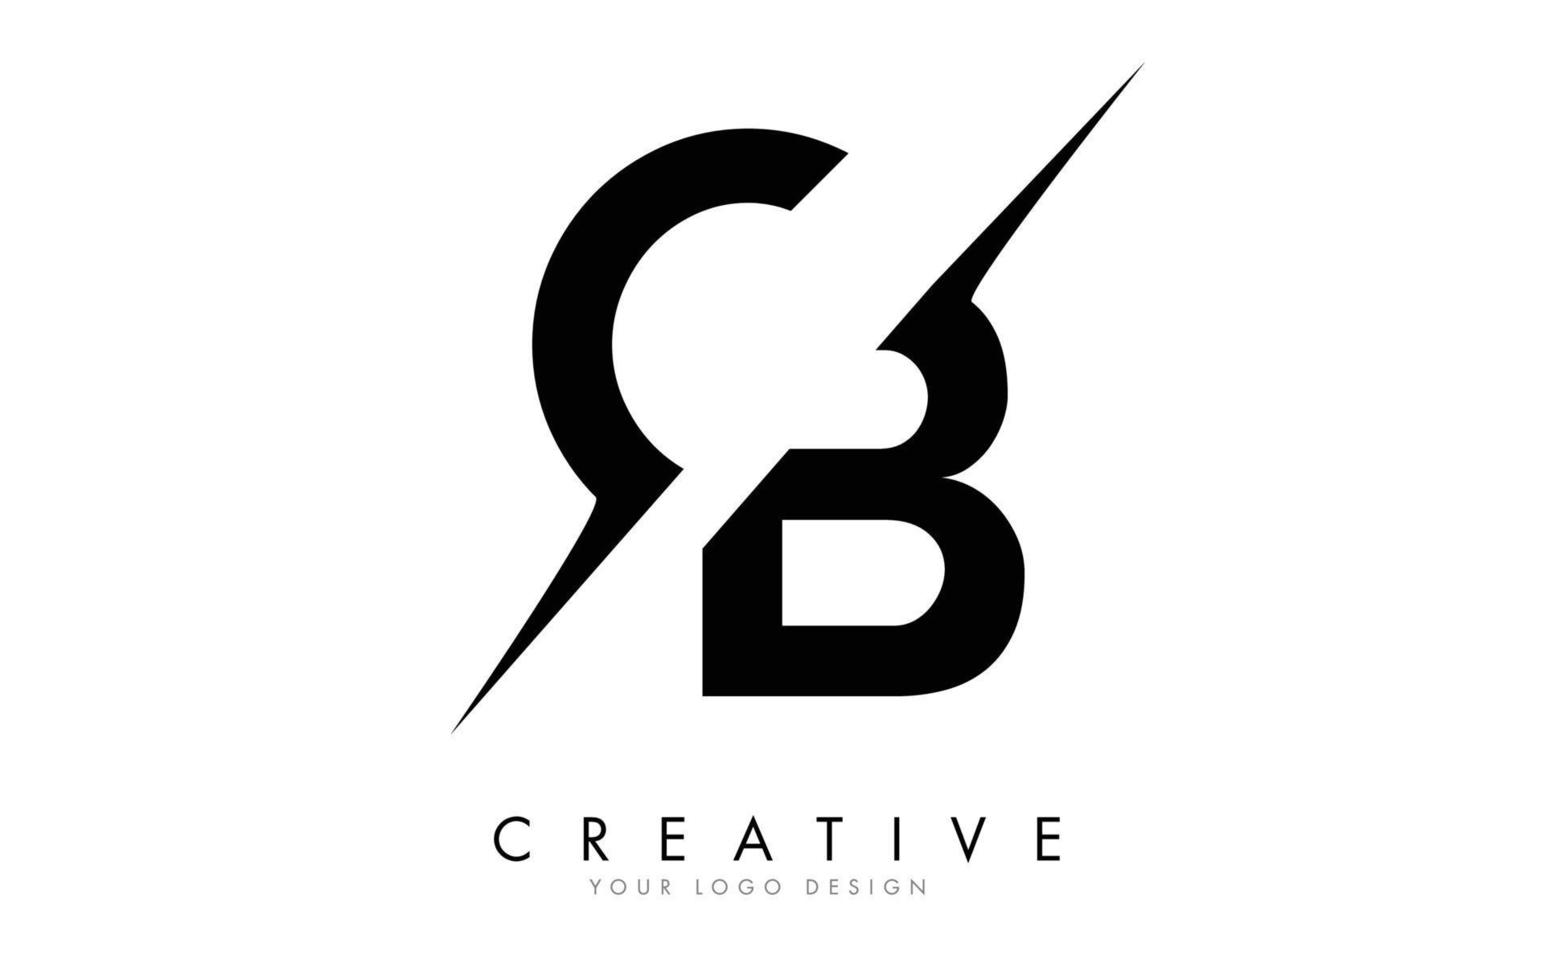 Diseño de logotipo cb cb letter con un corte creativo. vector